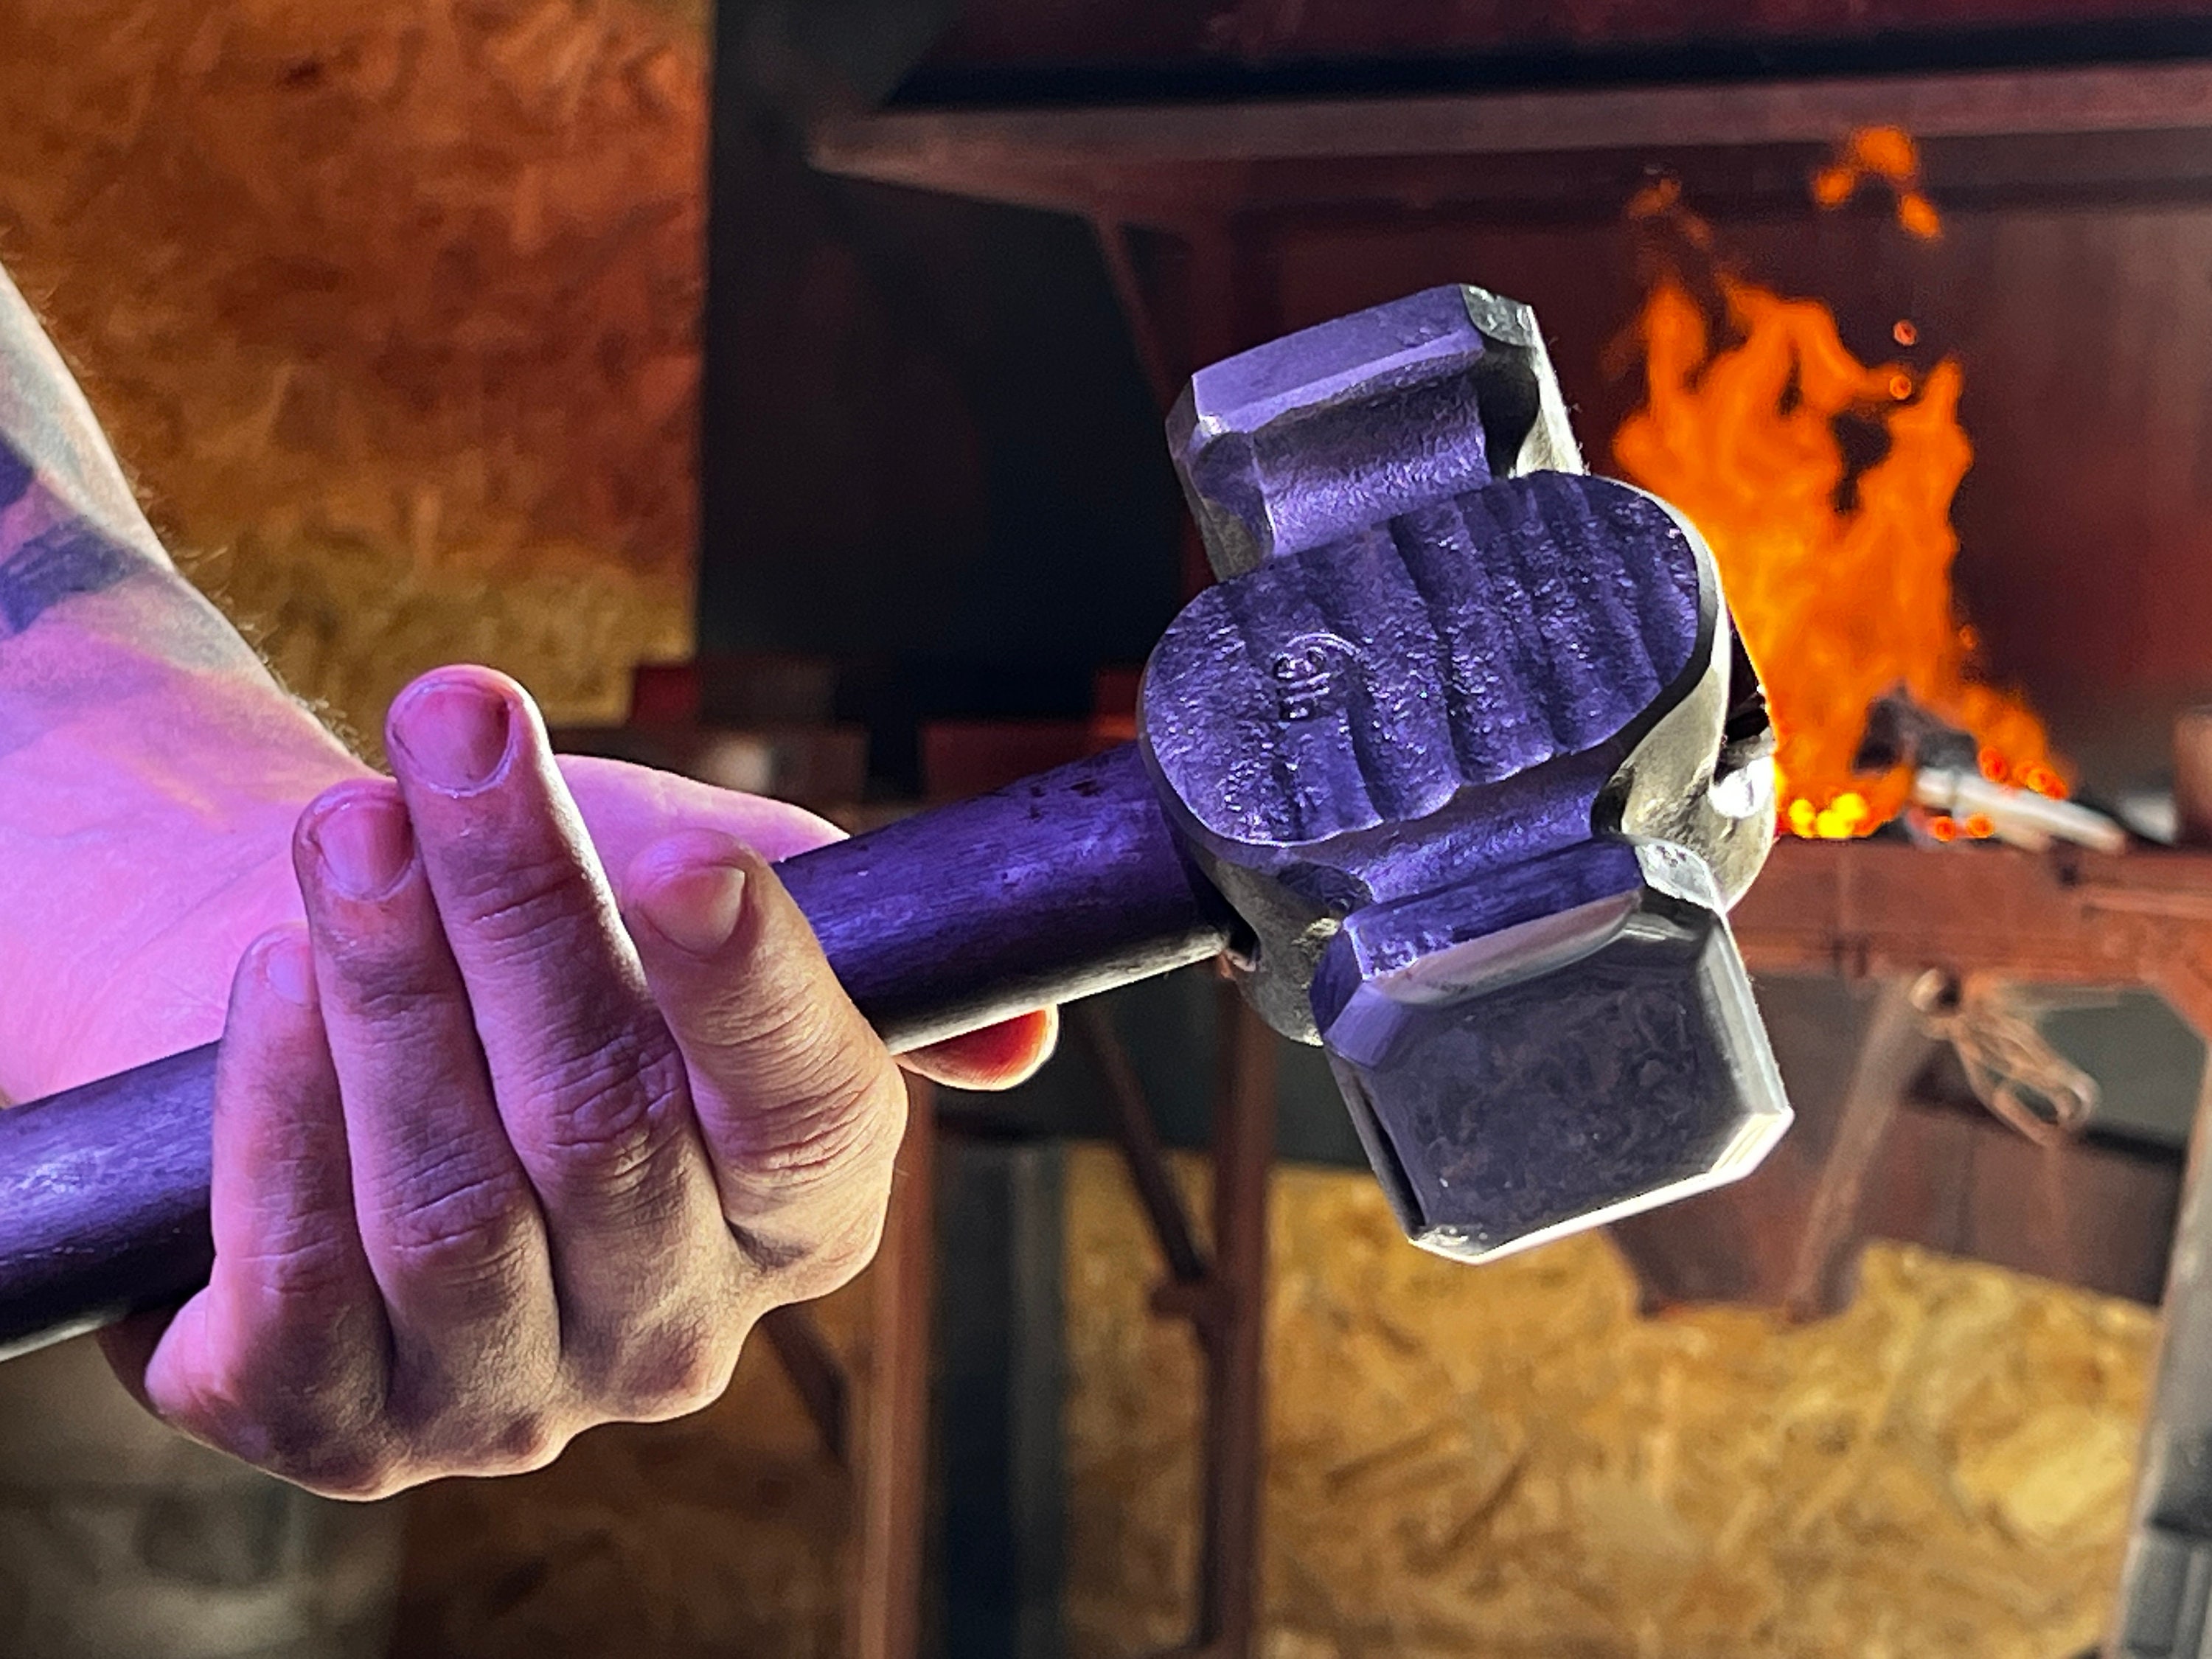 Cast Iron COLT 1855 Mini Anvil Salesman Sample Blacksmith Tool Small Heavy  Anvil 